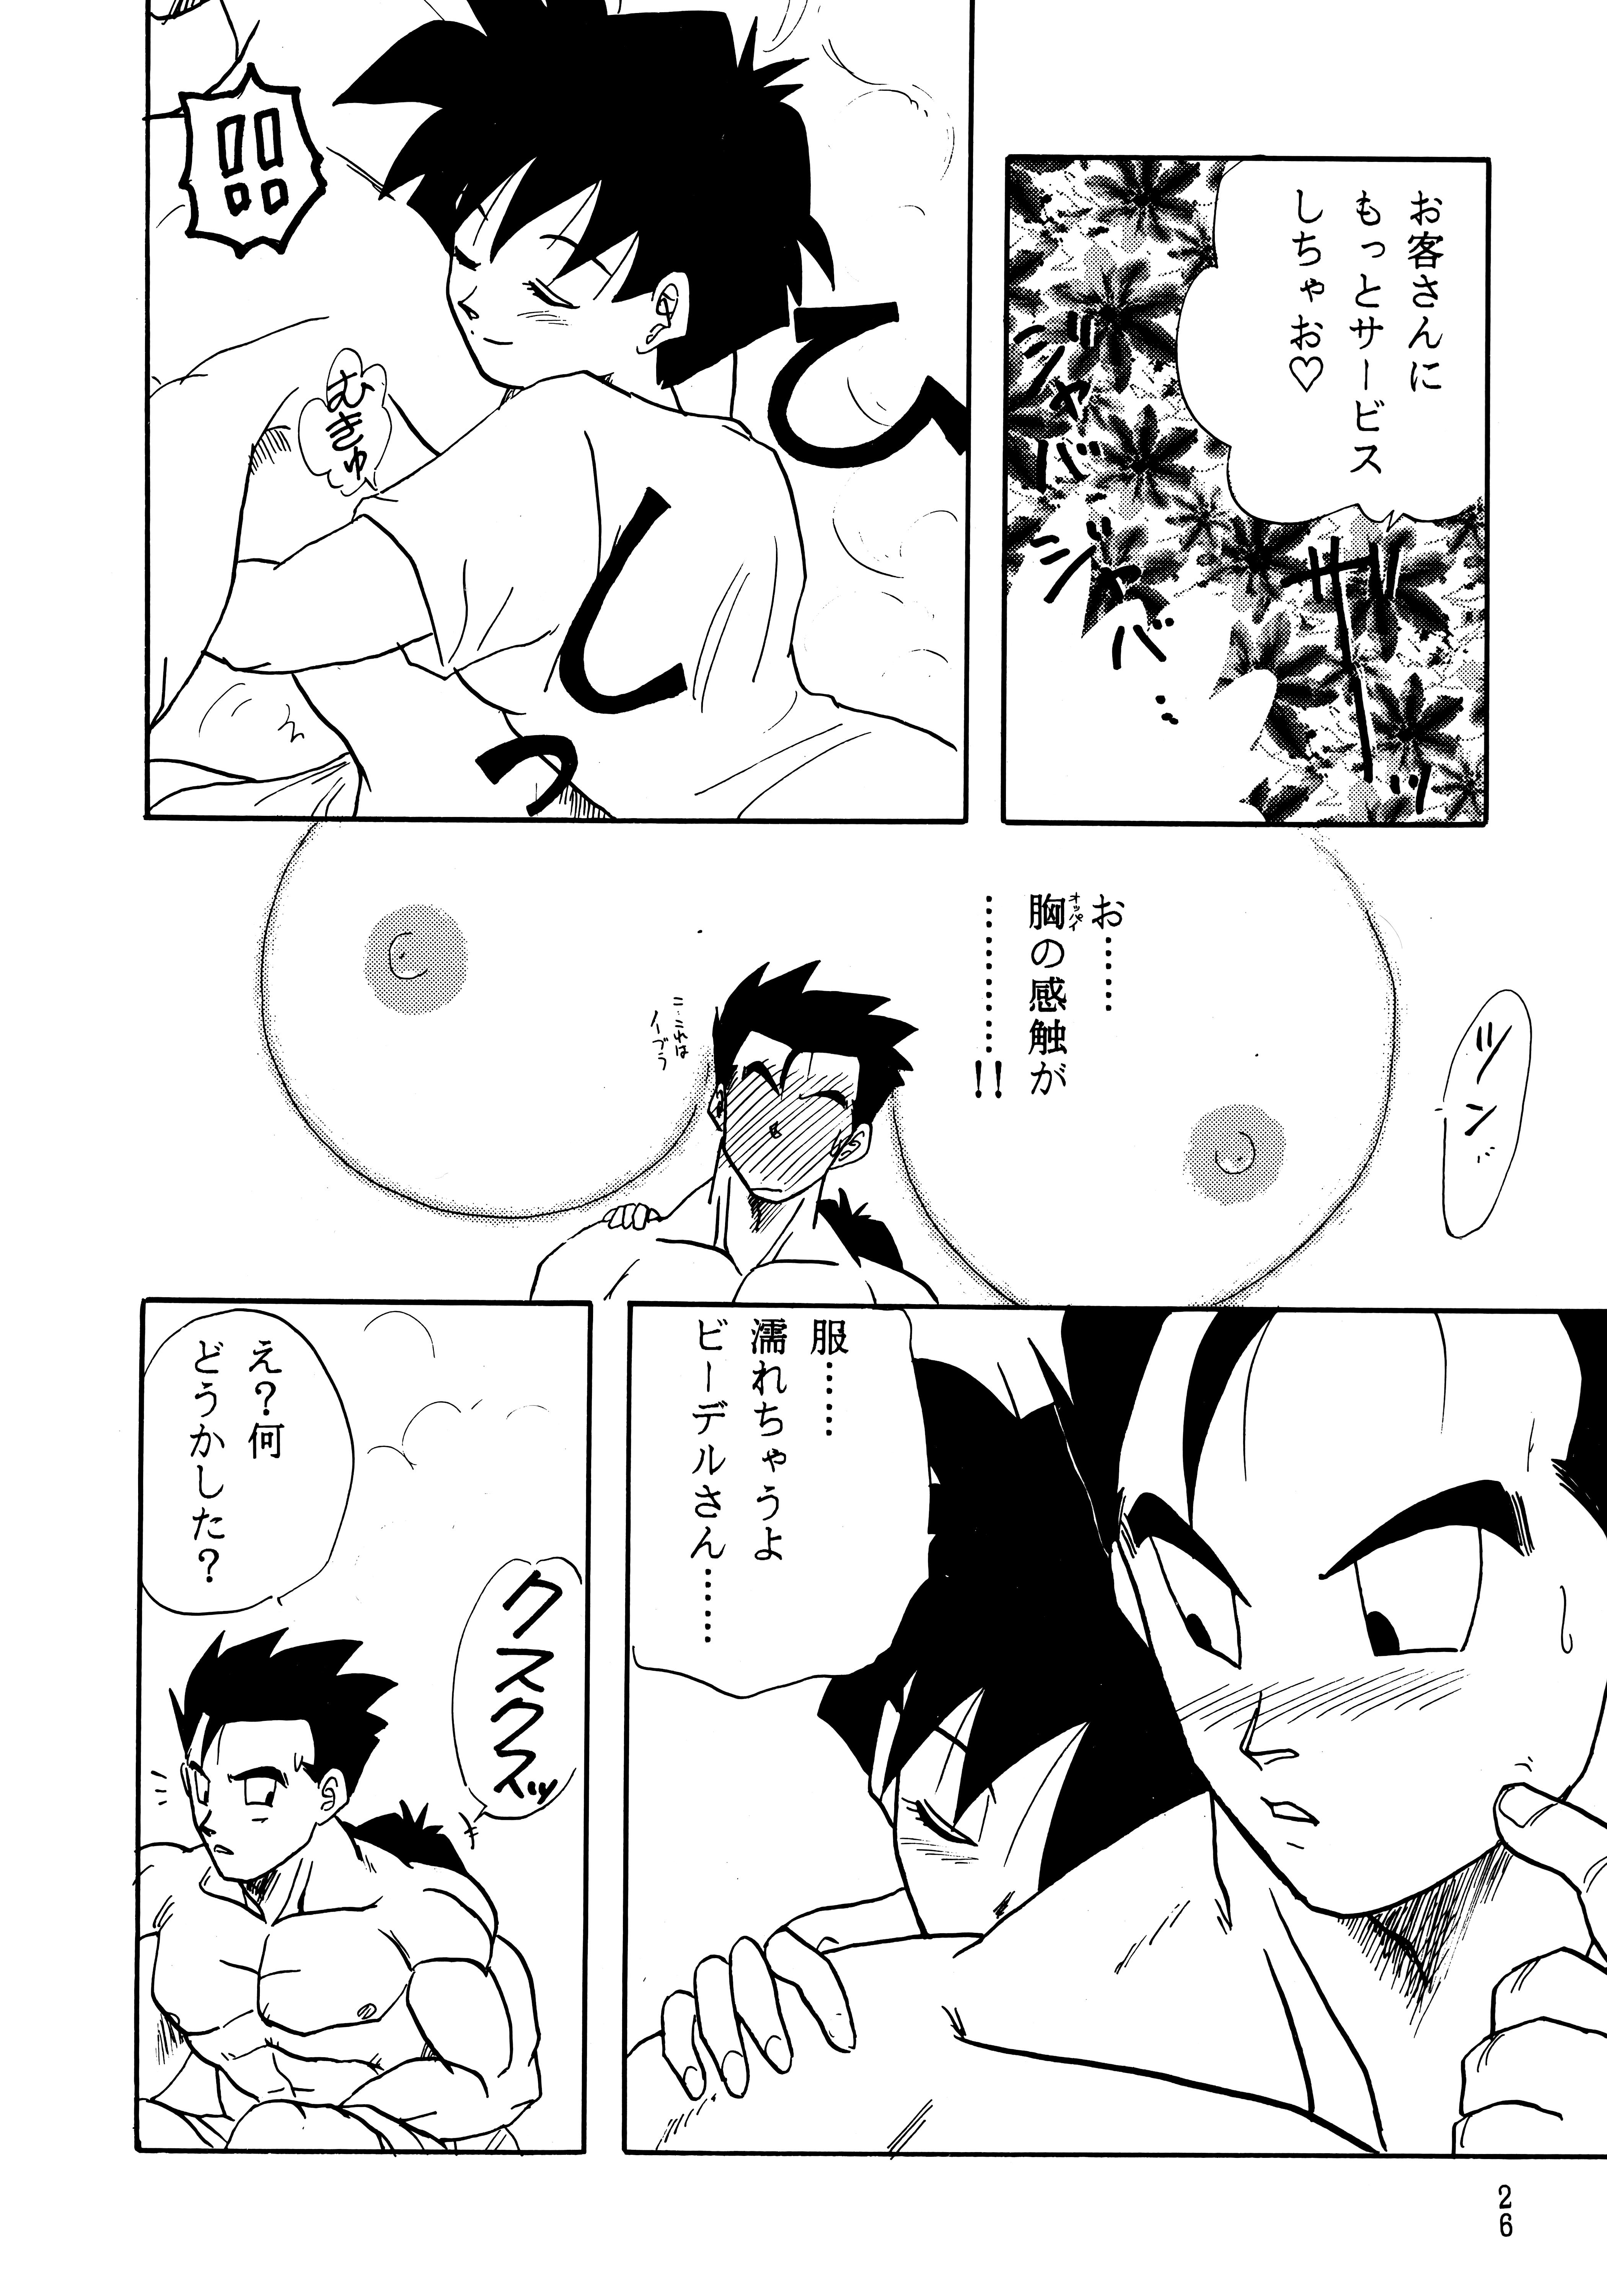 Z Page 26 Of 43 dragon ball z hentai comic, Z Page 26 Of 43 dragon ball...